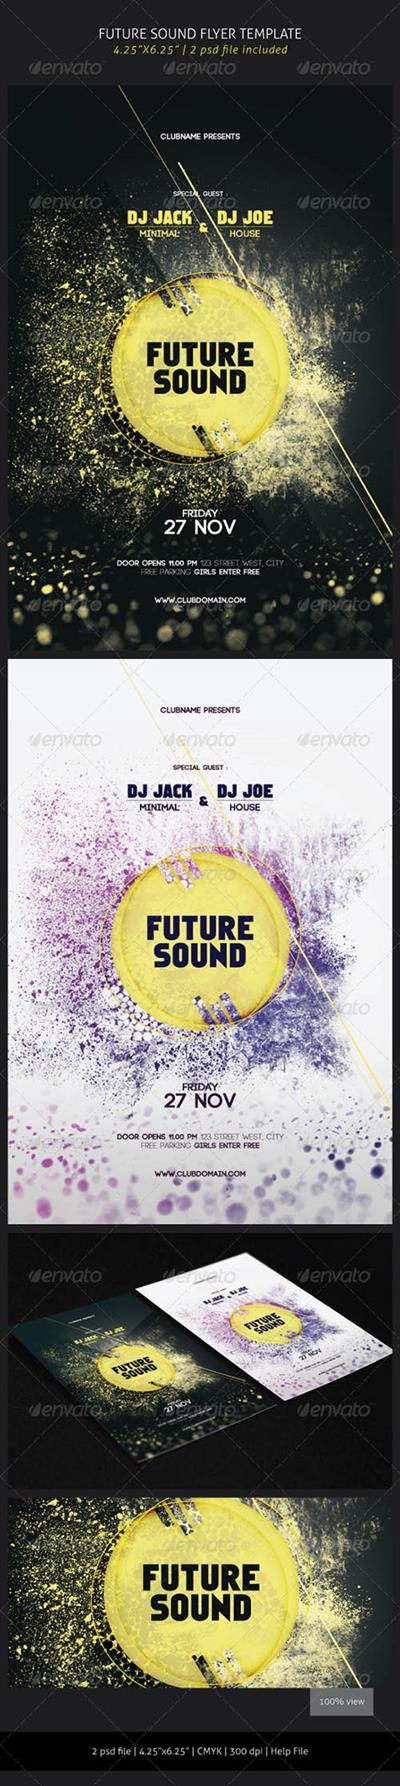 GR - Future Sound Flyer Template 5868032